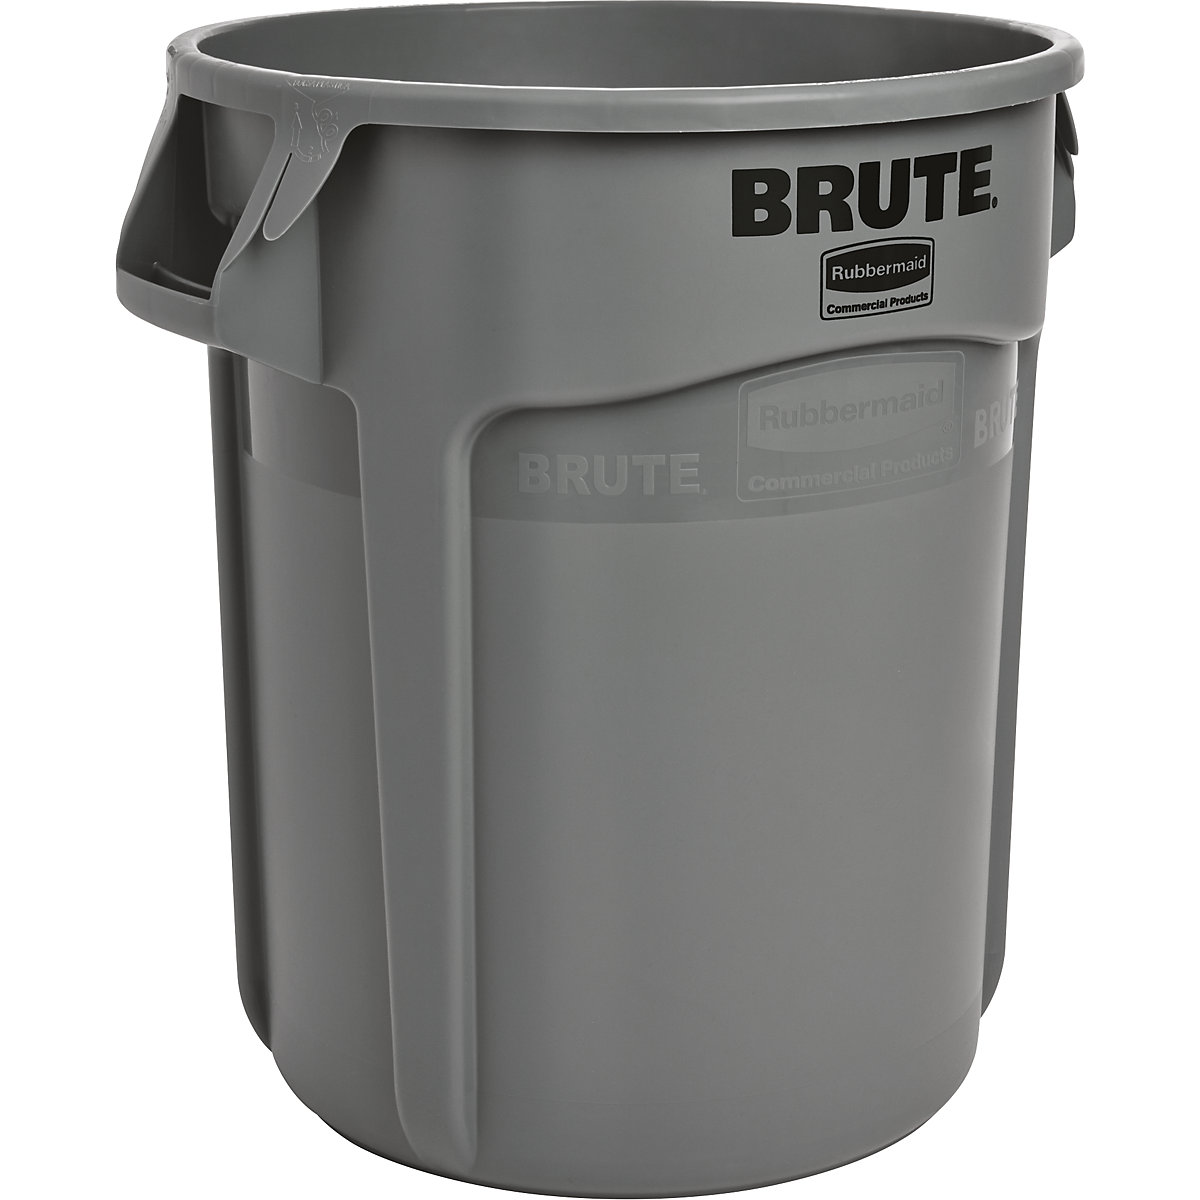 Univerzalni kontejner BRUTE®, okrugli – Rubbermaid, sadržaj 75 l, u sivoj boji